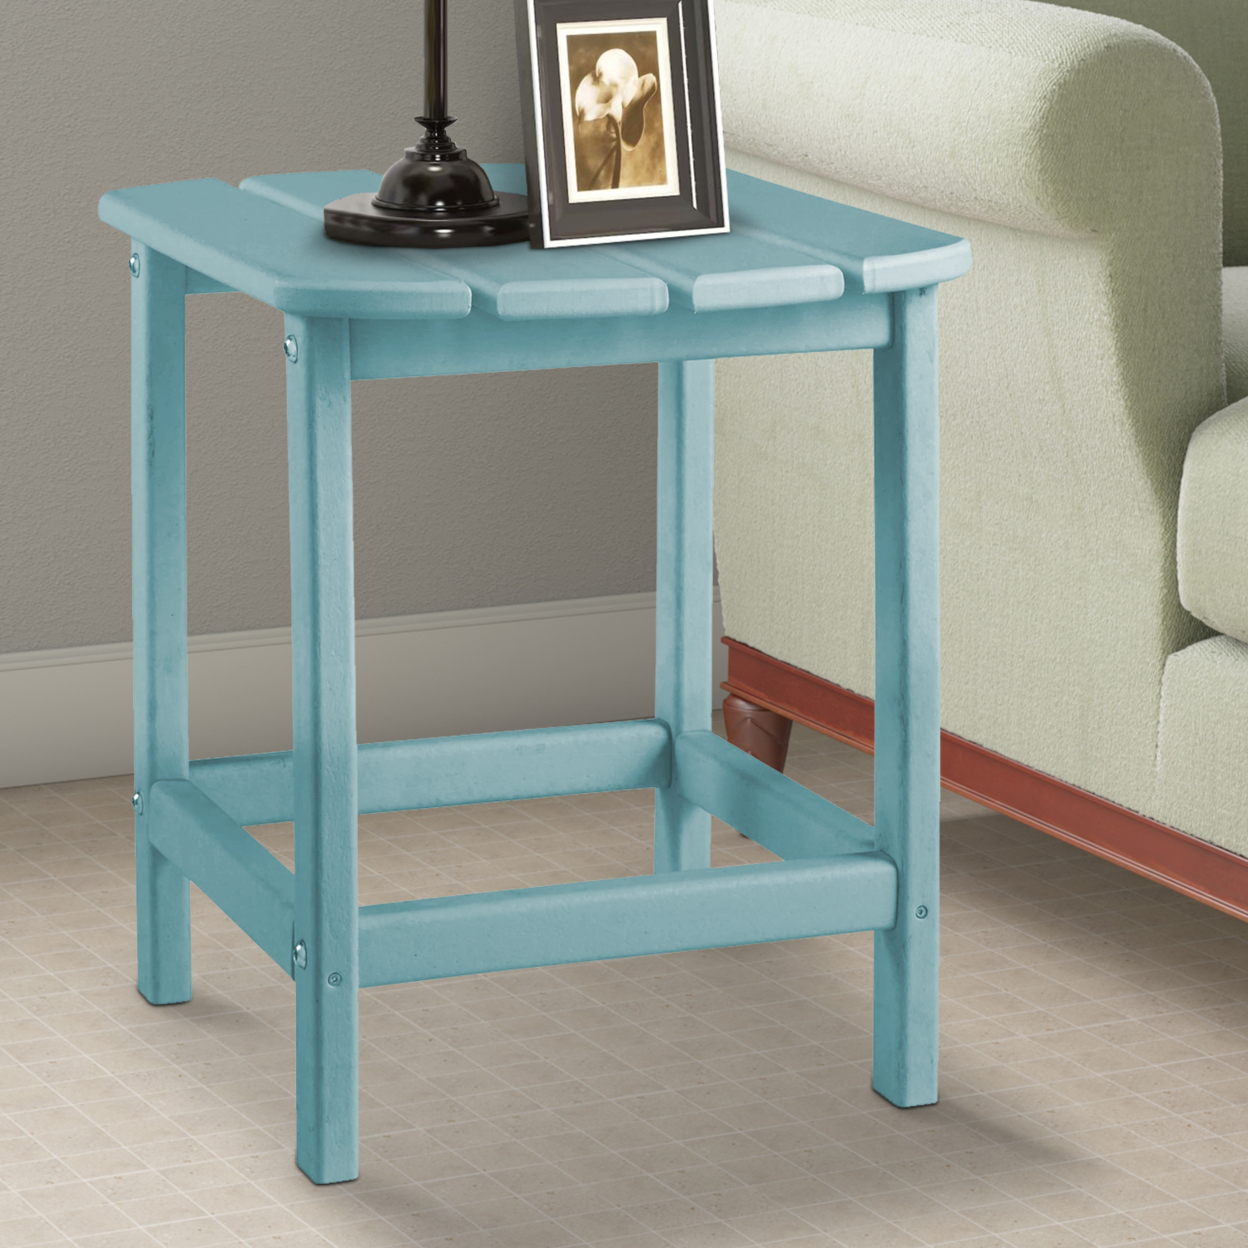 Slatted Rectangular Hard Plastic End Table With Straight Legs, Blue- Saltoro Sherpi